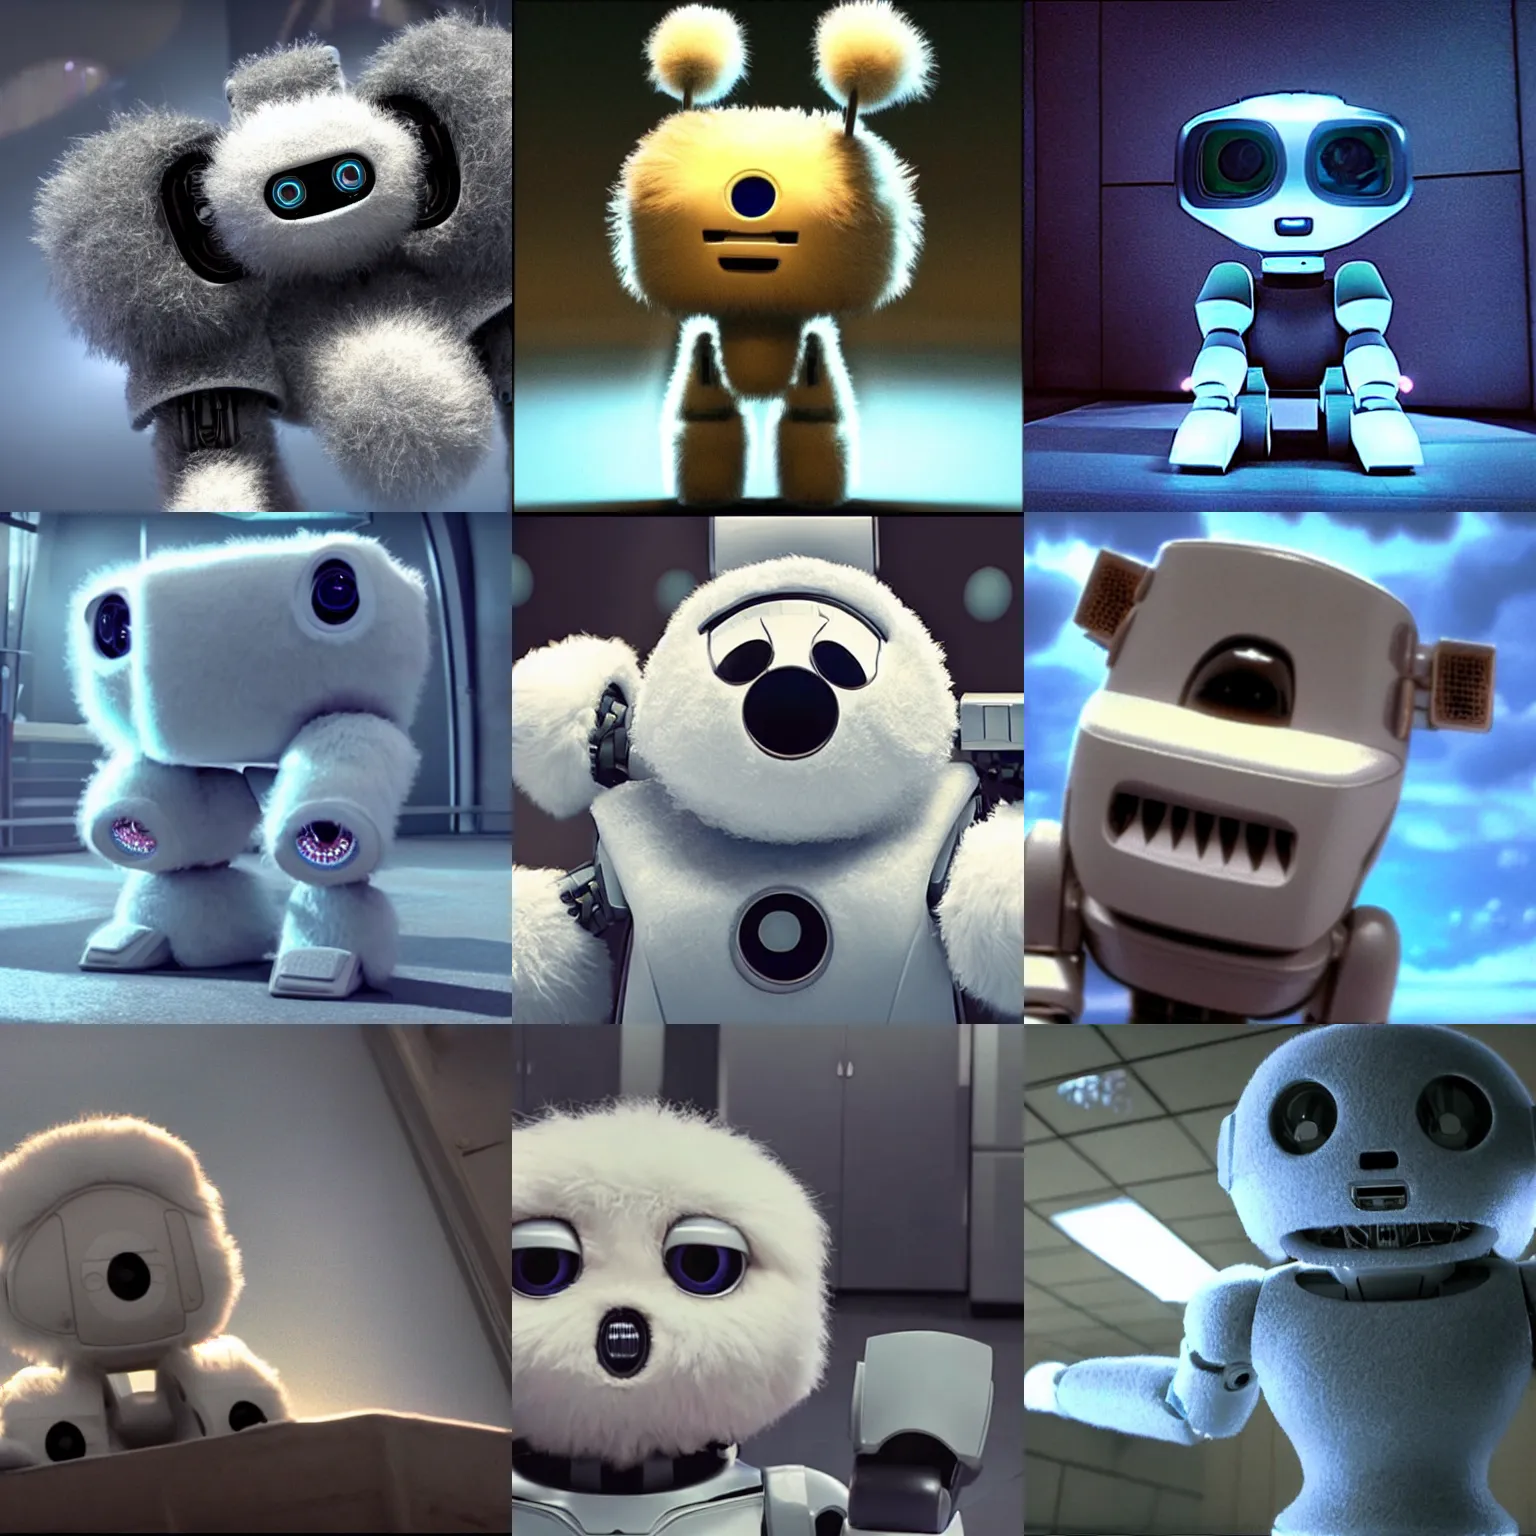 Prompt: < movie - still type = 3 d > adorable fluffy robot looks up hopefully < / movie - still >